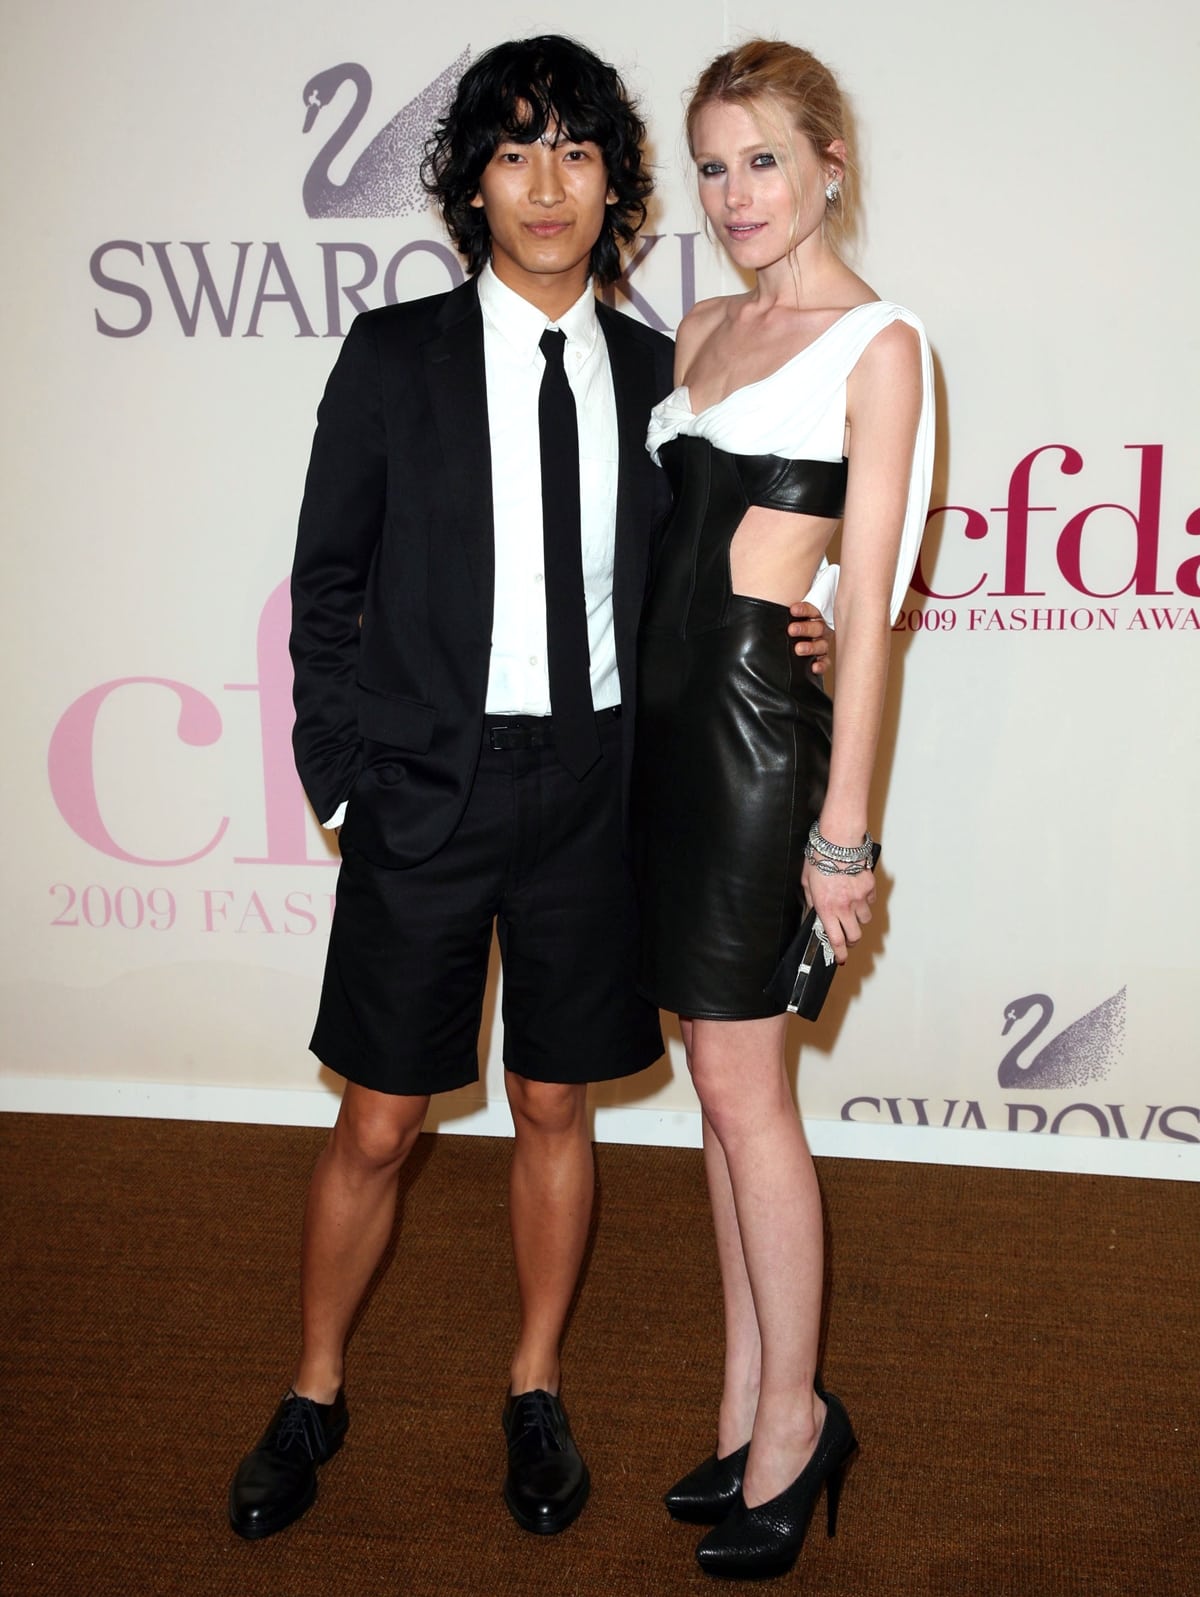 Alexander Wang and Dree Hemingway attend CFDA AWARDS 2009